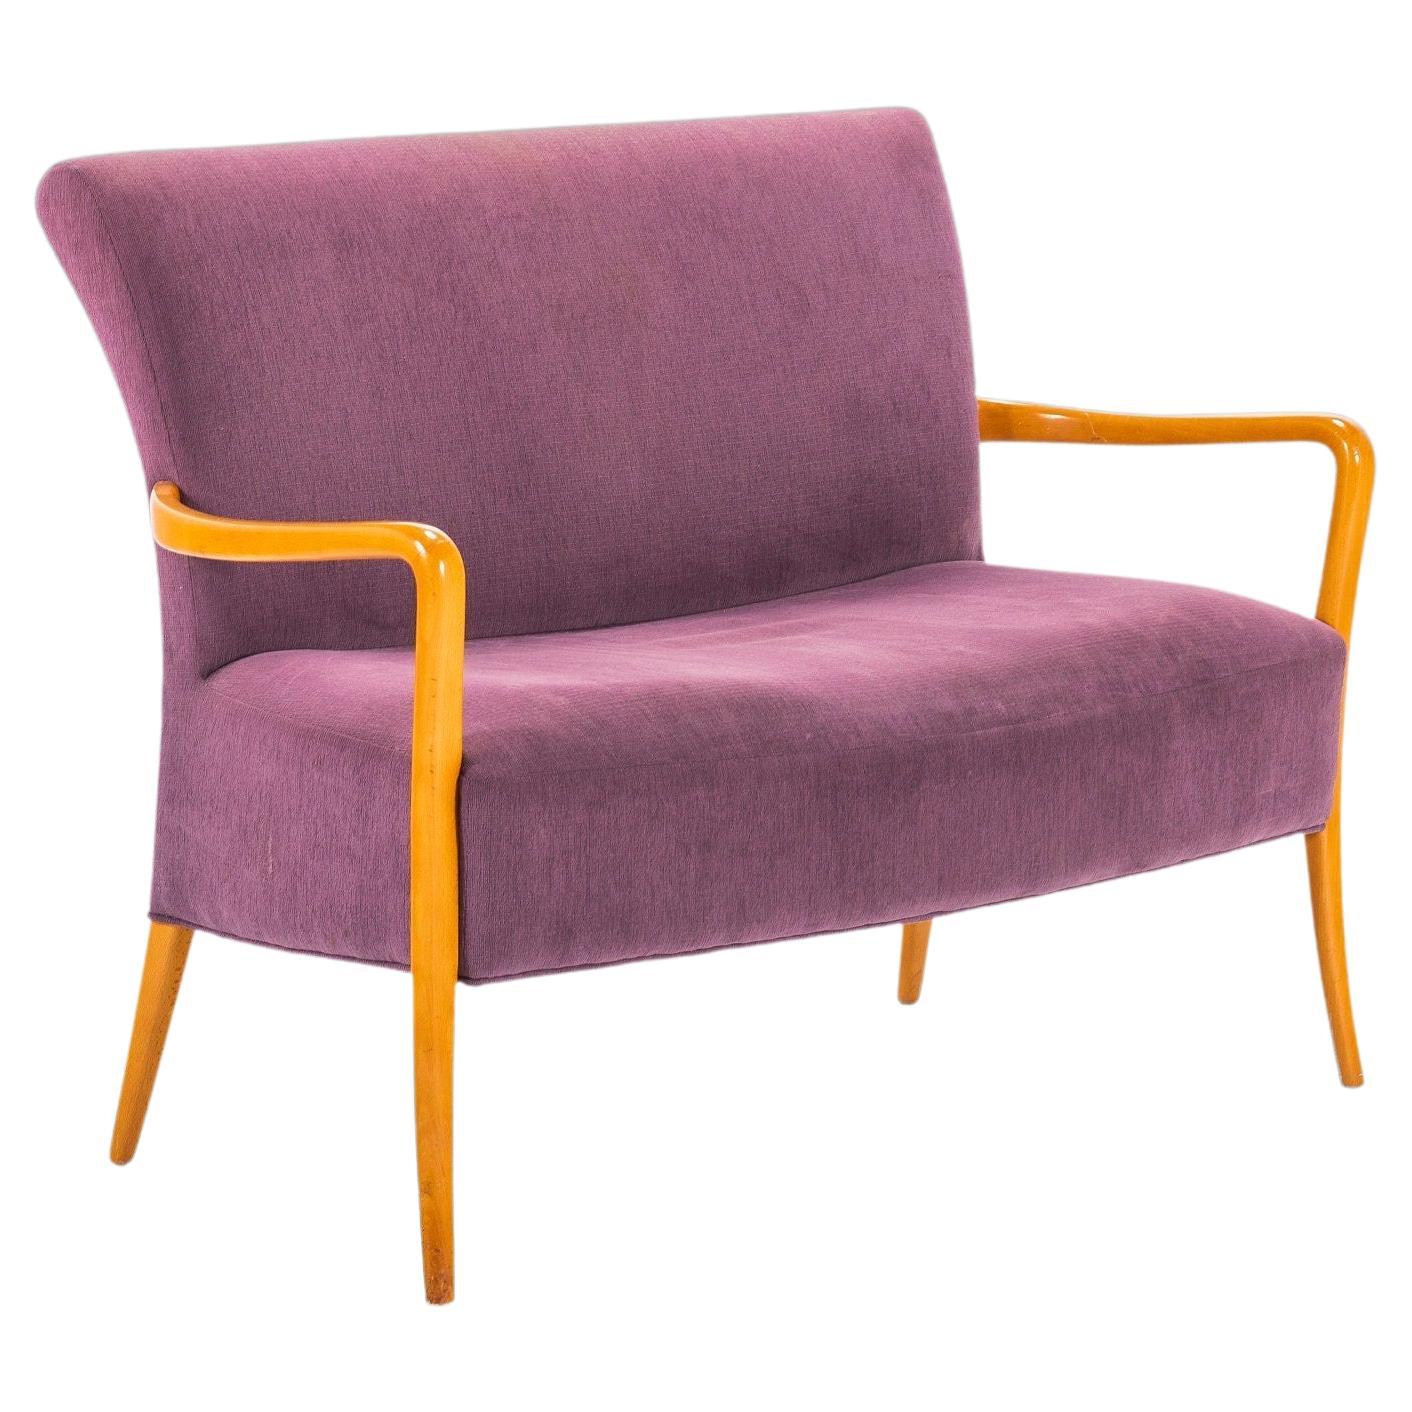 Contemporary Italian Purple Setee Sofa After Guglielmo Ulrich with Oak Frame For Sale